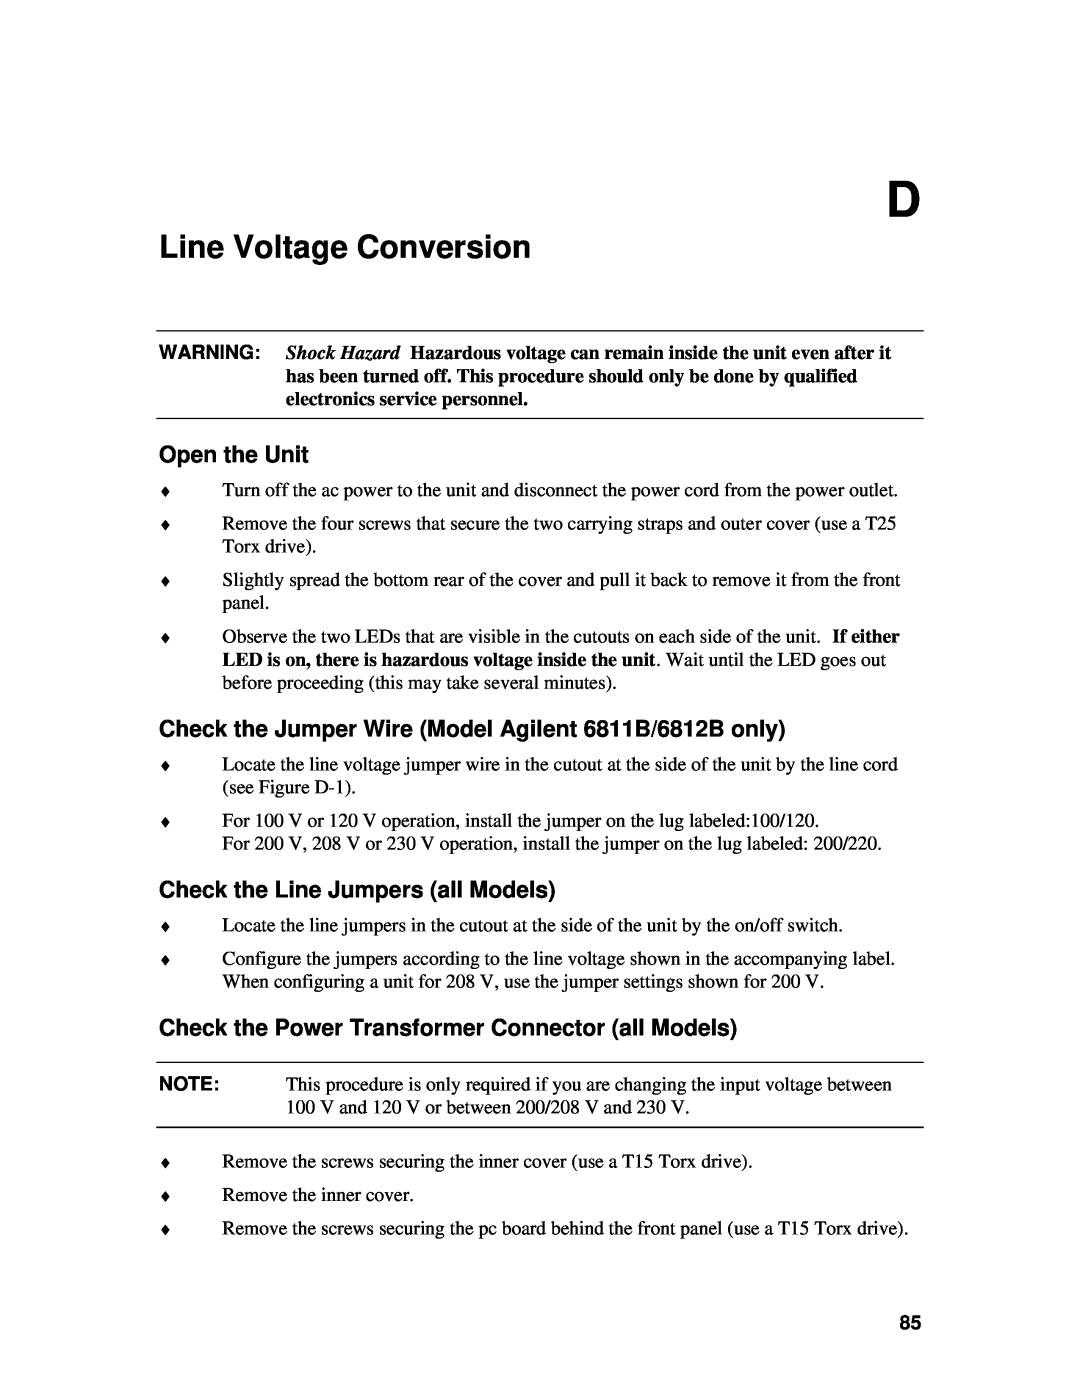 Agilent Technologies manual Line Voltage Conversion, Open the Unit, Check the Jumper Wire Model Agilent 6811B/6812B only 